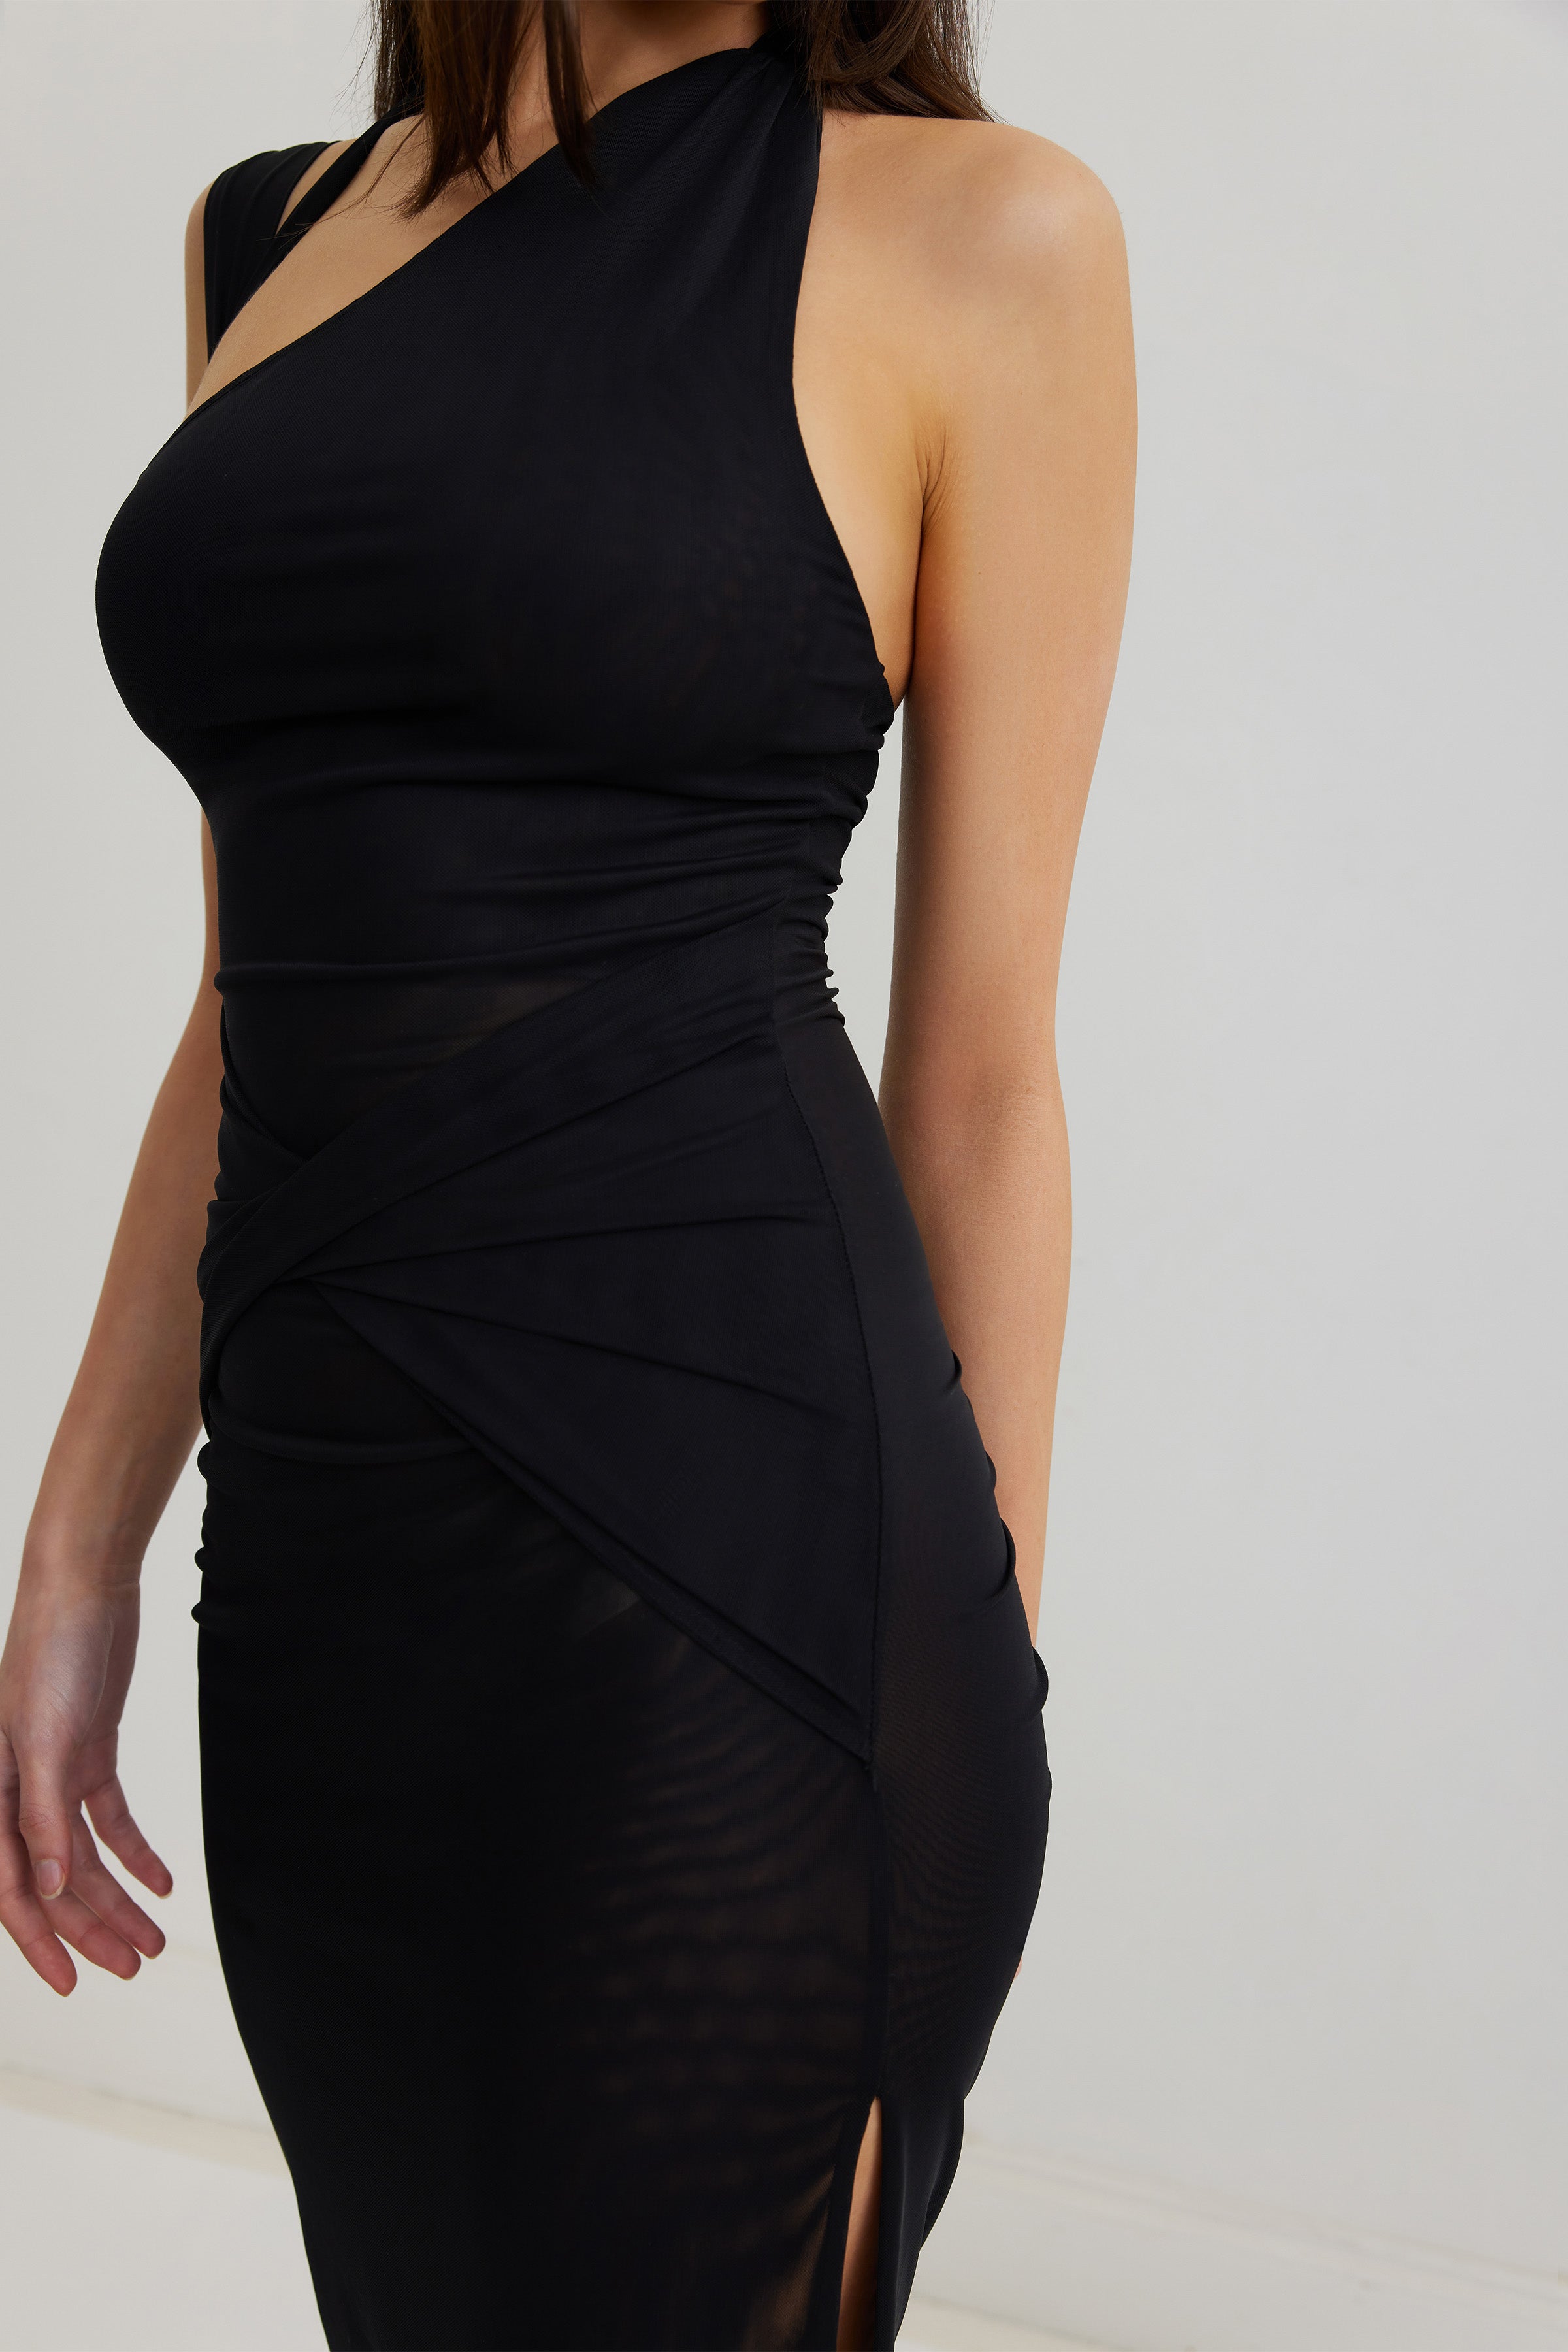 Mirage Dress - Black